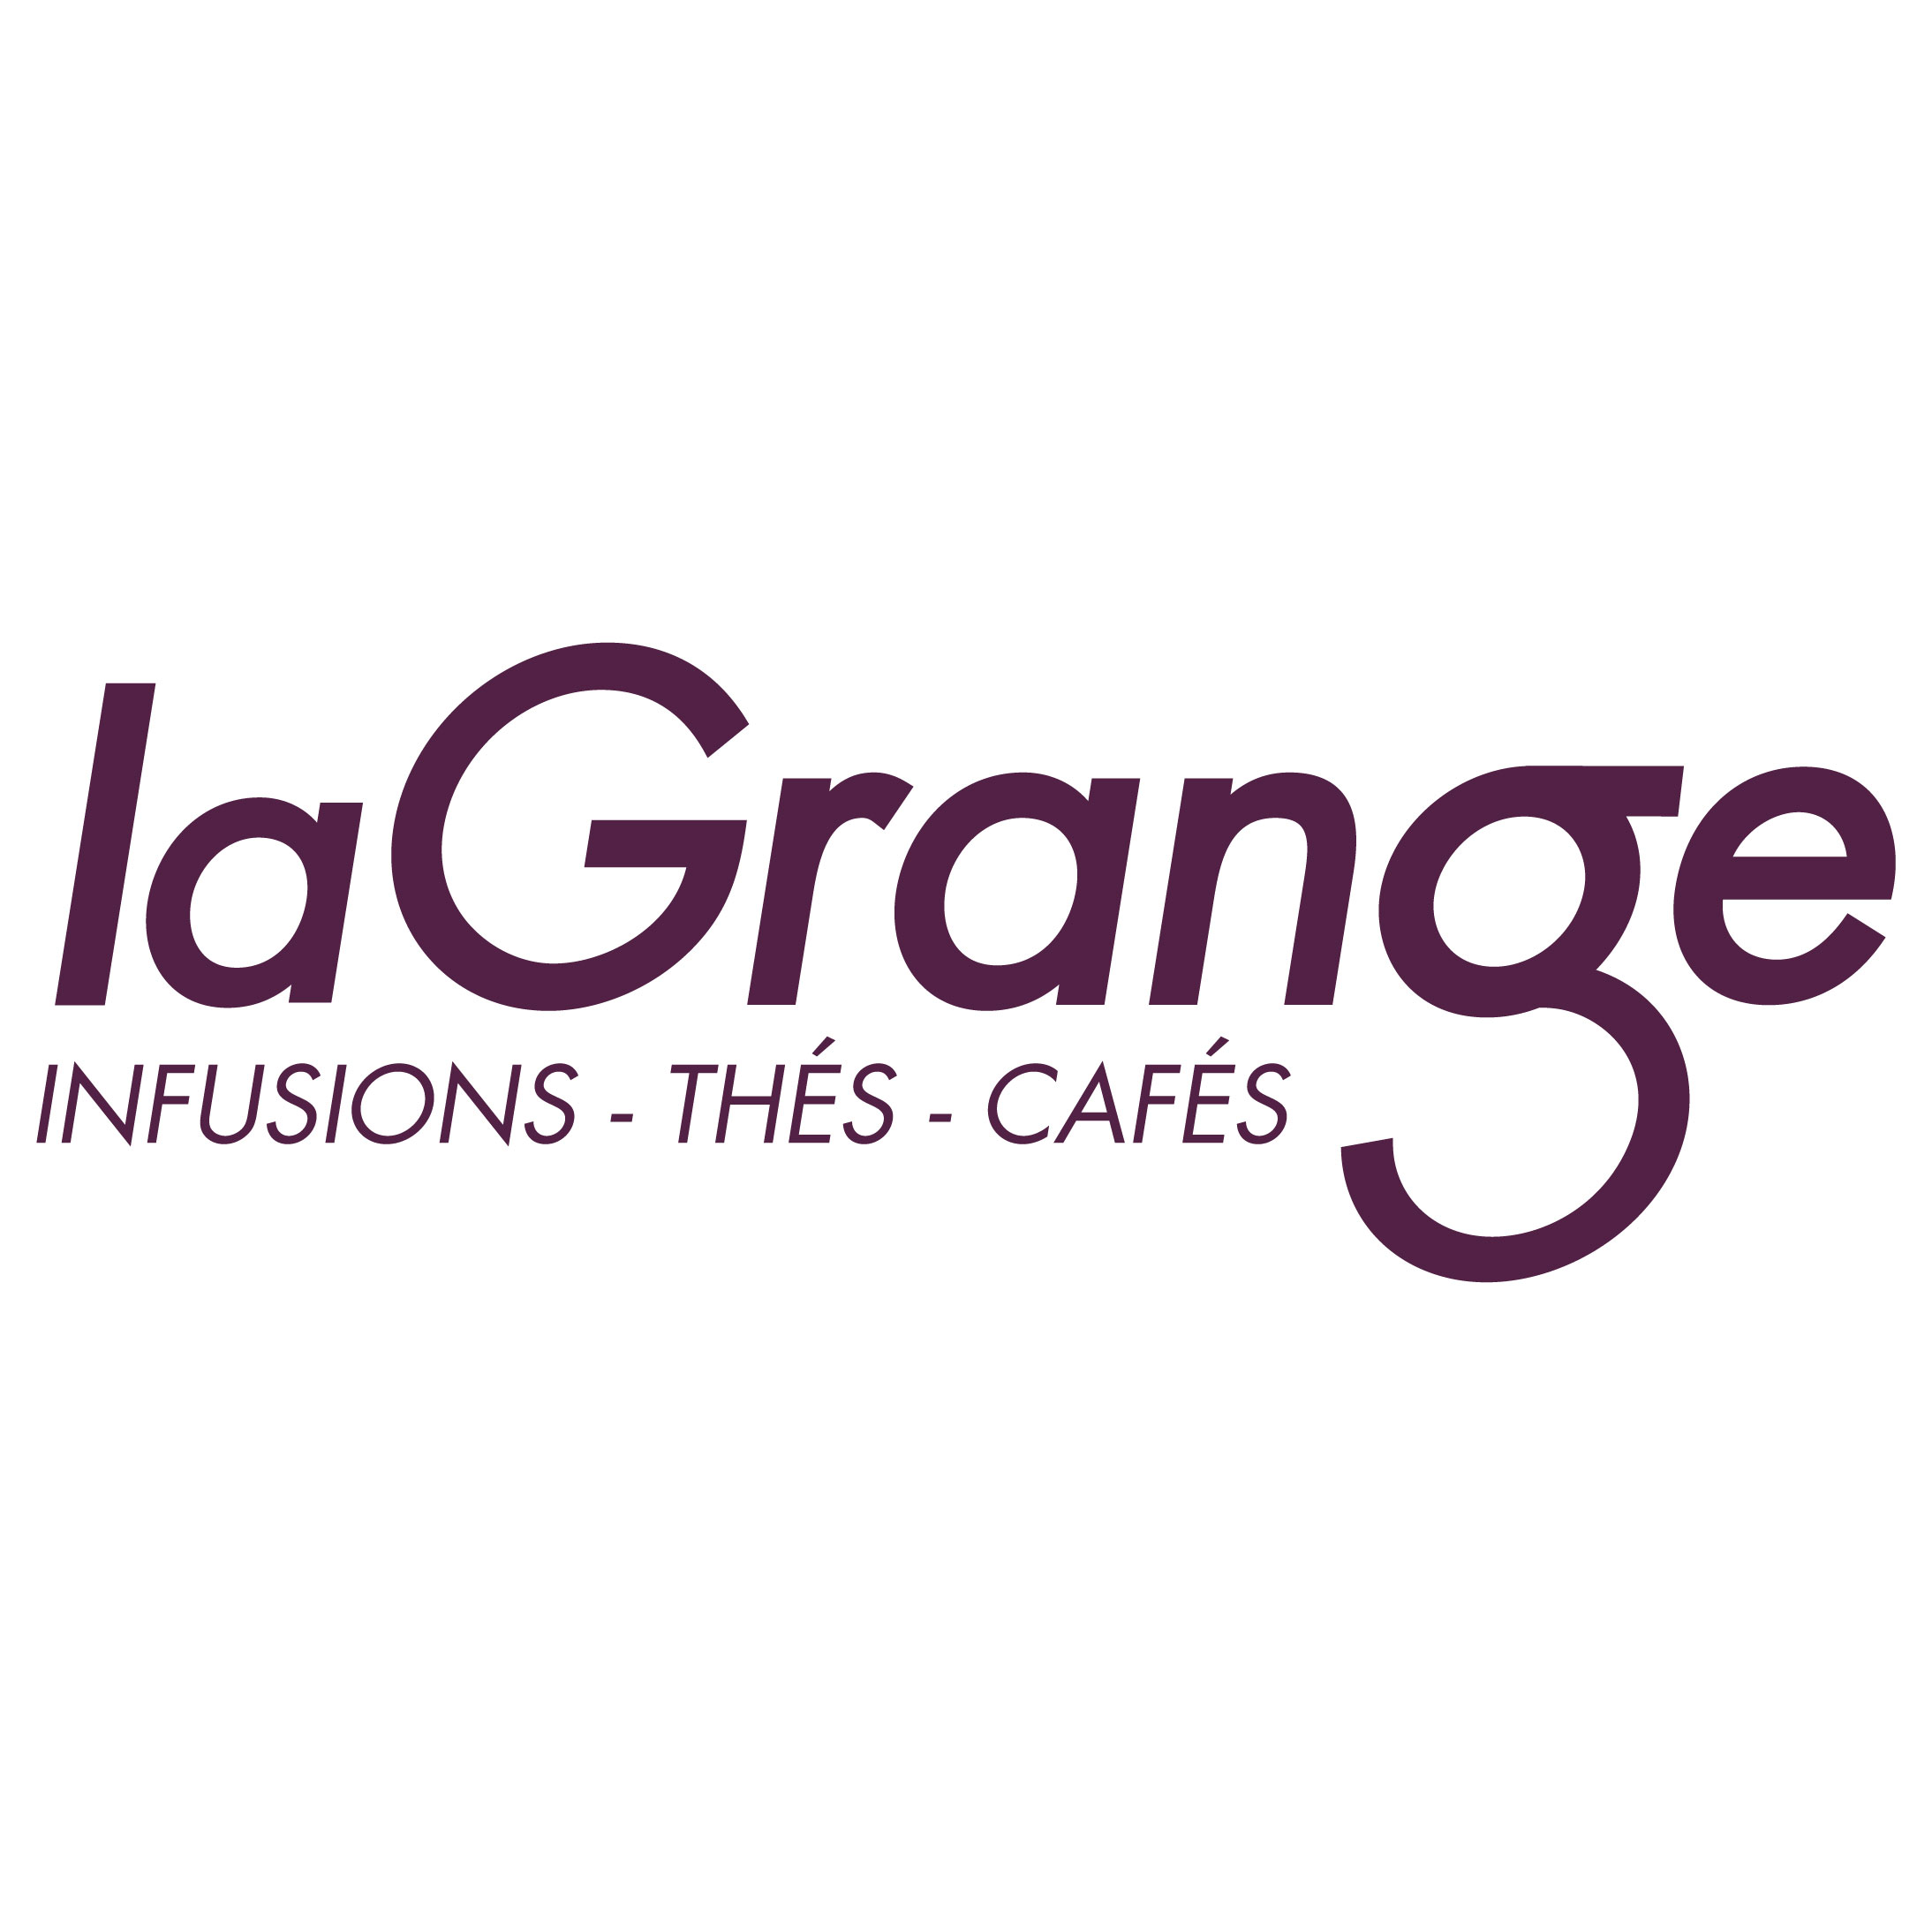 laGrange infusions thés cafés